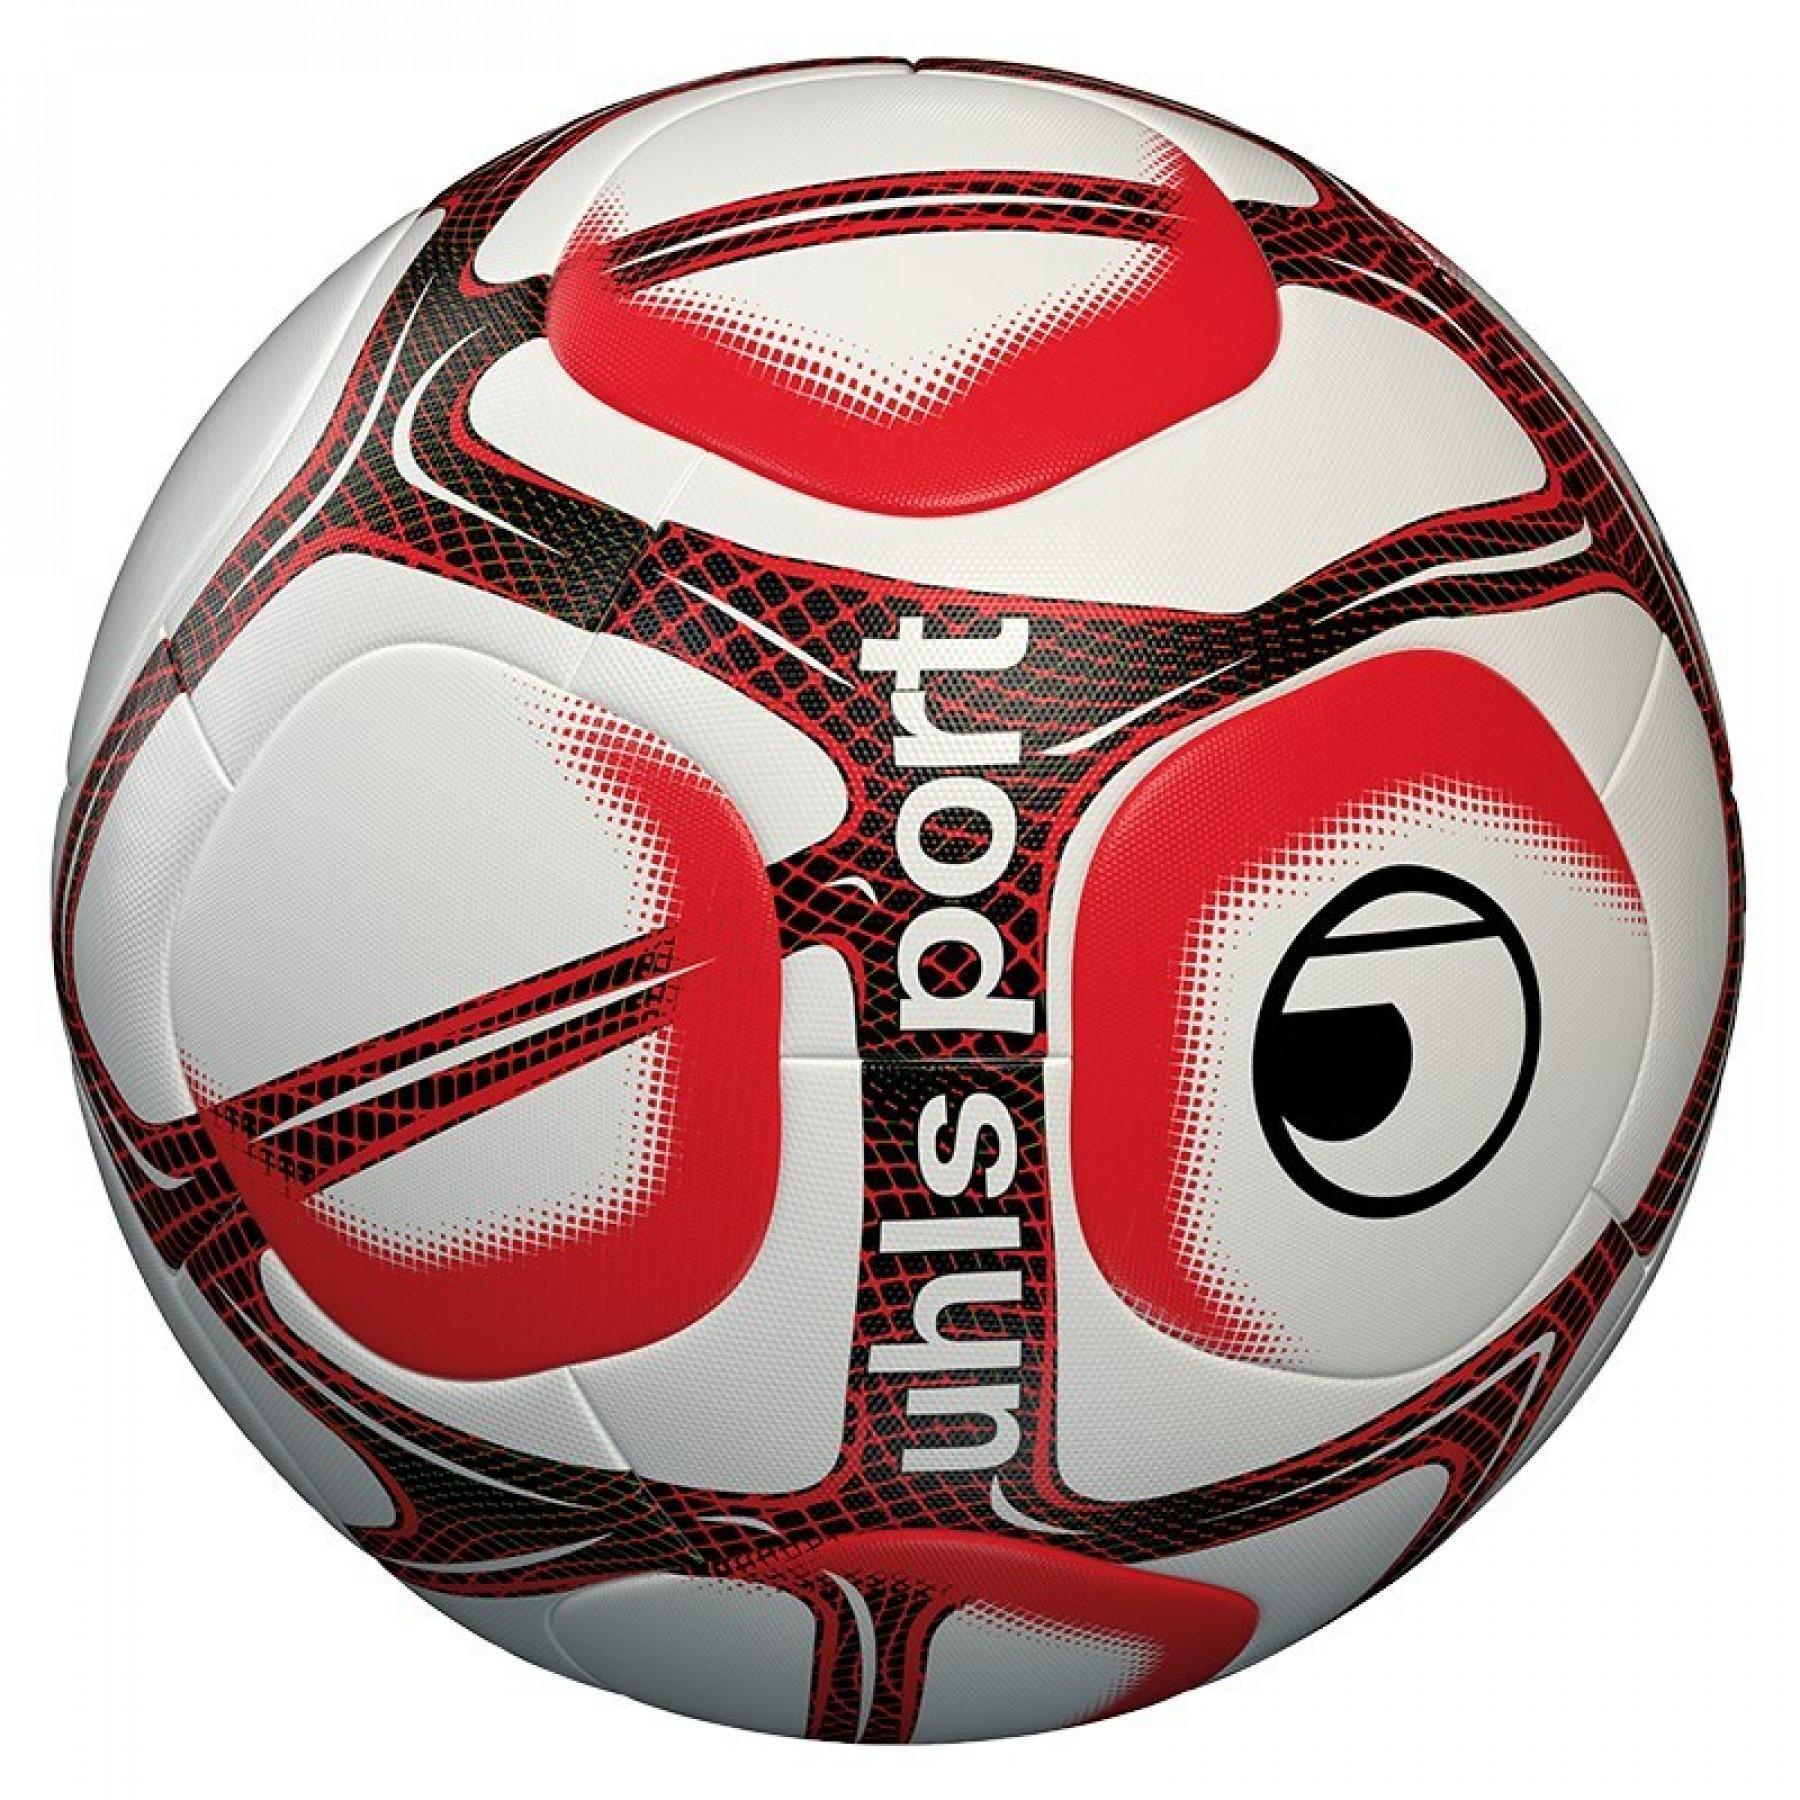 Ballon Uhlsport Triompheo match